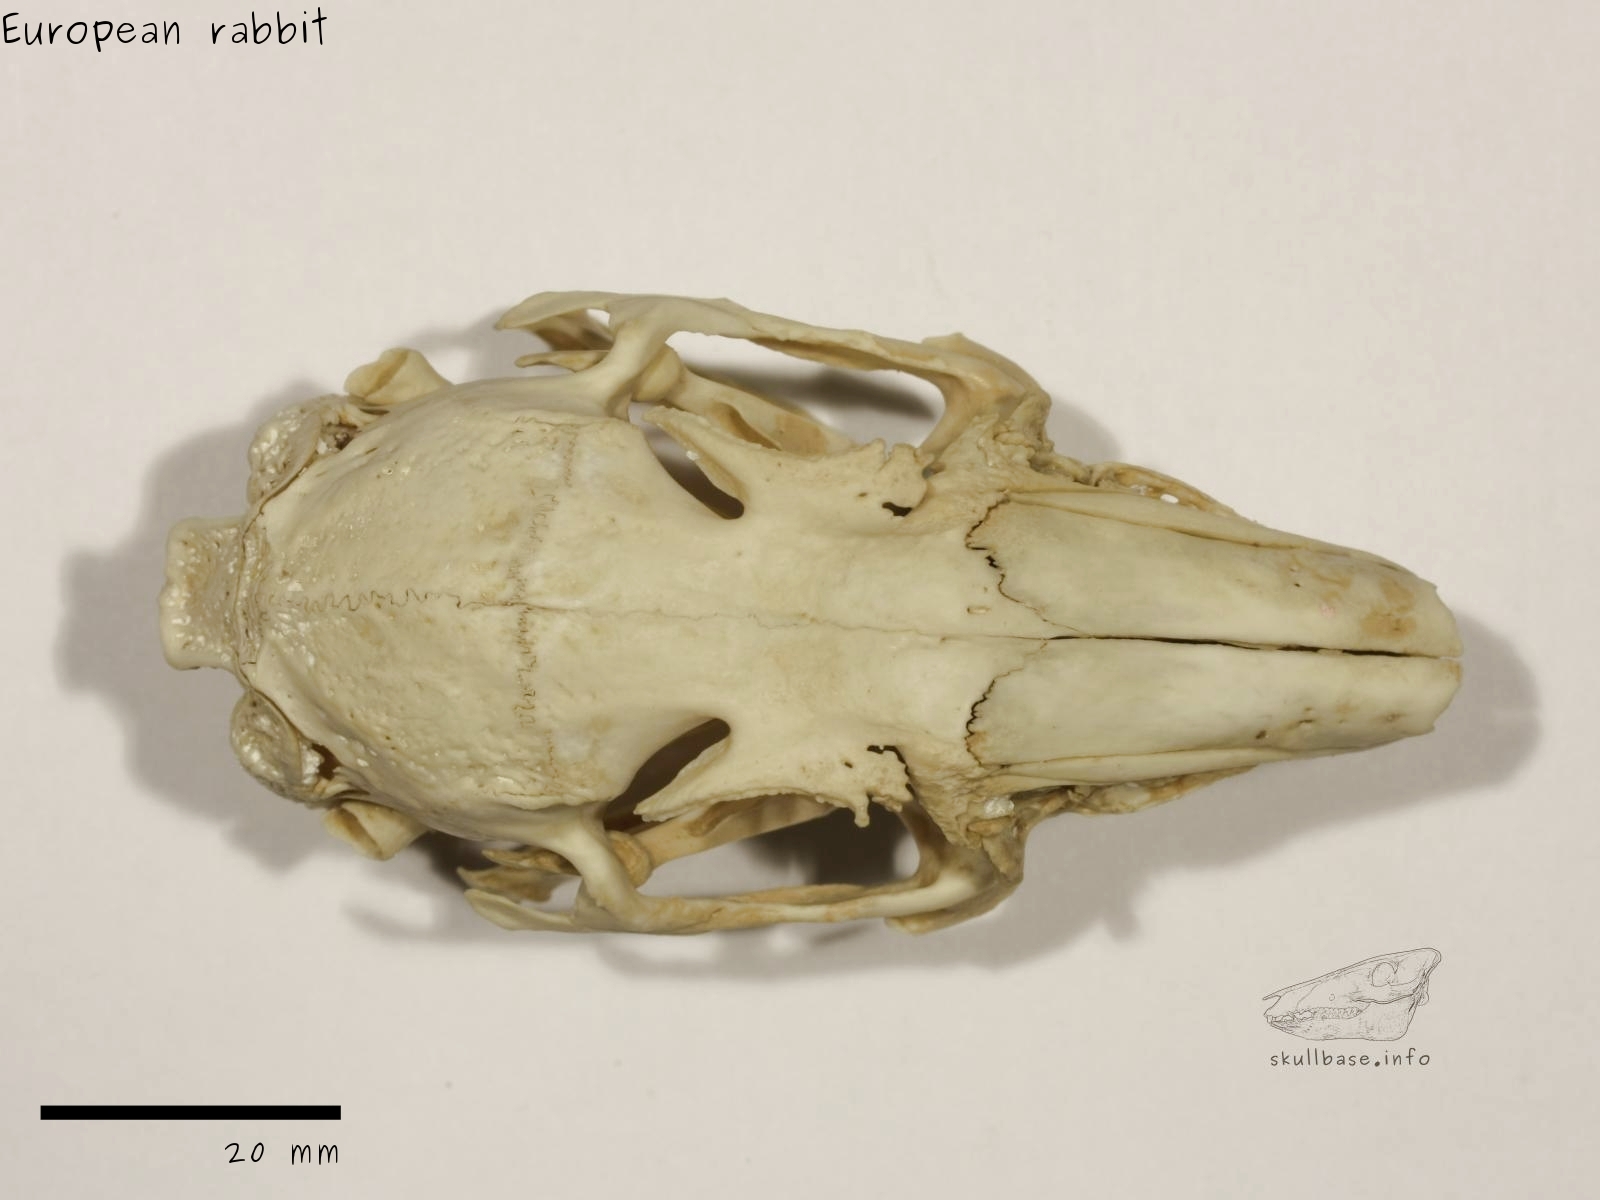 European rabbit (Oryctolagus cuniculus) skull dorsal view